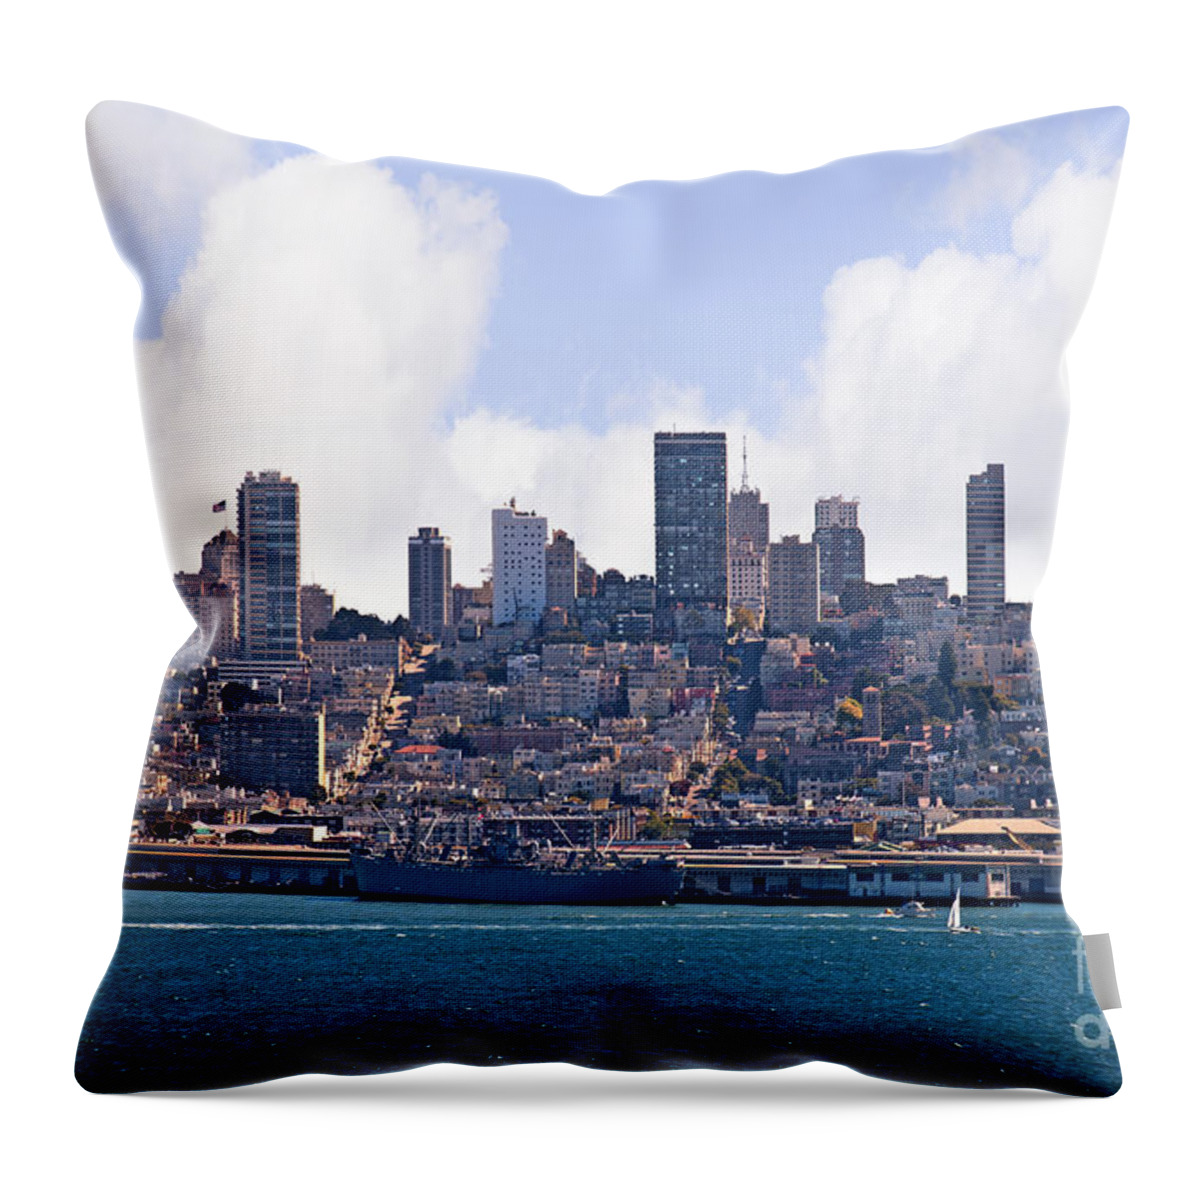 San Francisco Throw Pillow featuring the photograph San Francisco Skyline by Brenda Kean